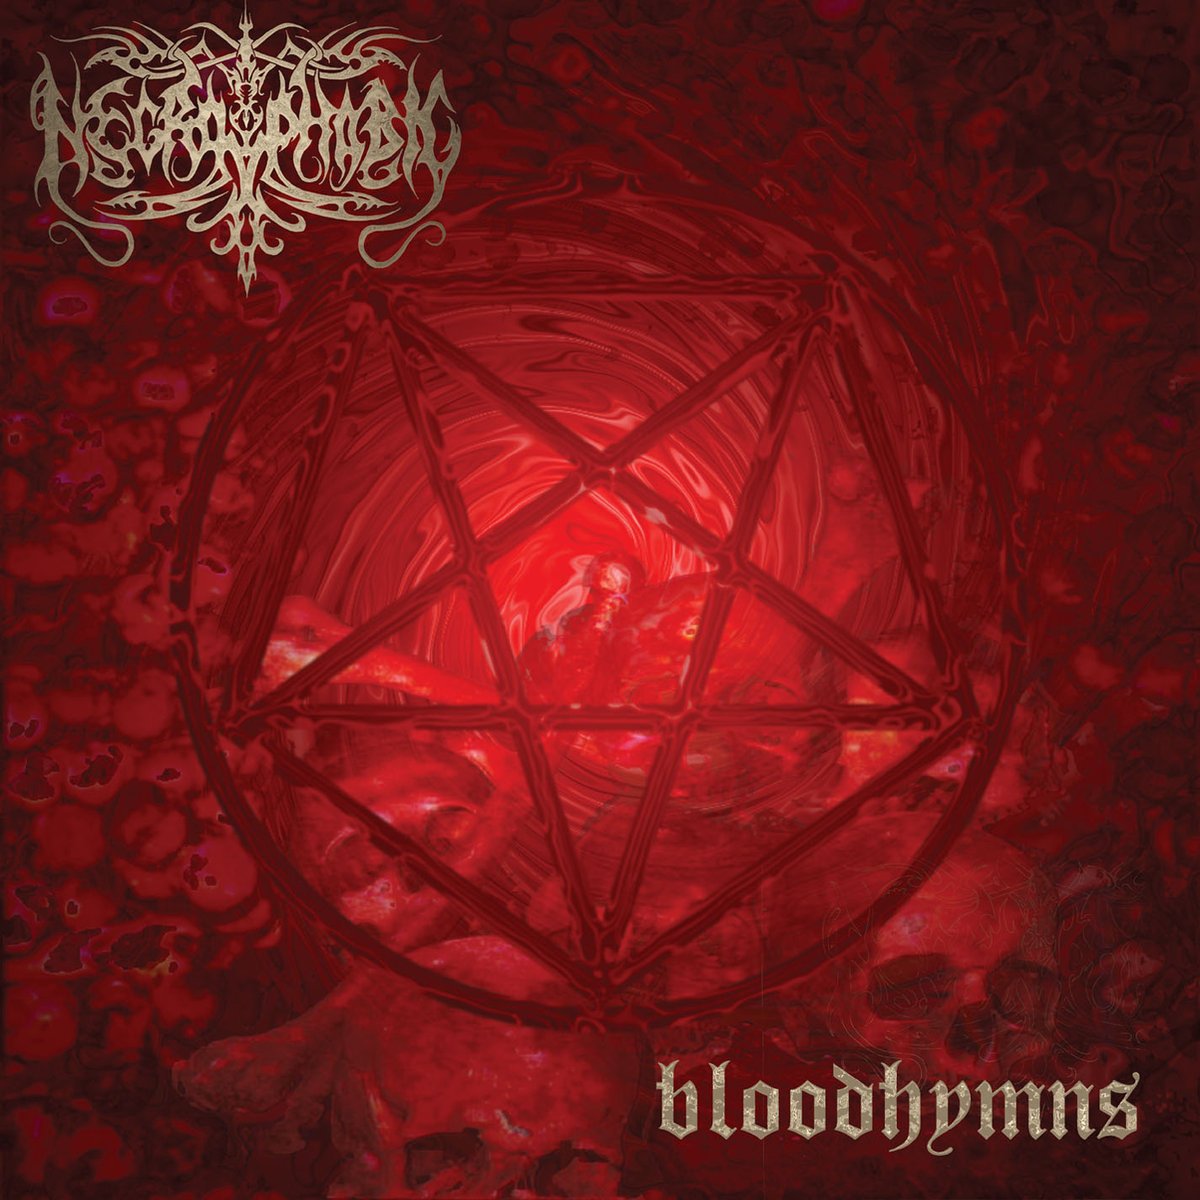 Necrophobic-Bloodhymns-REMASTERED-LP-FLAC-2018-mwnd